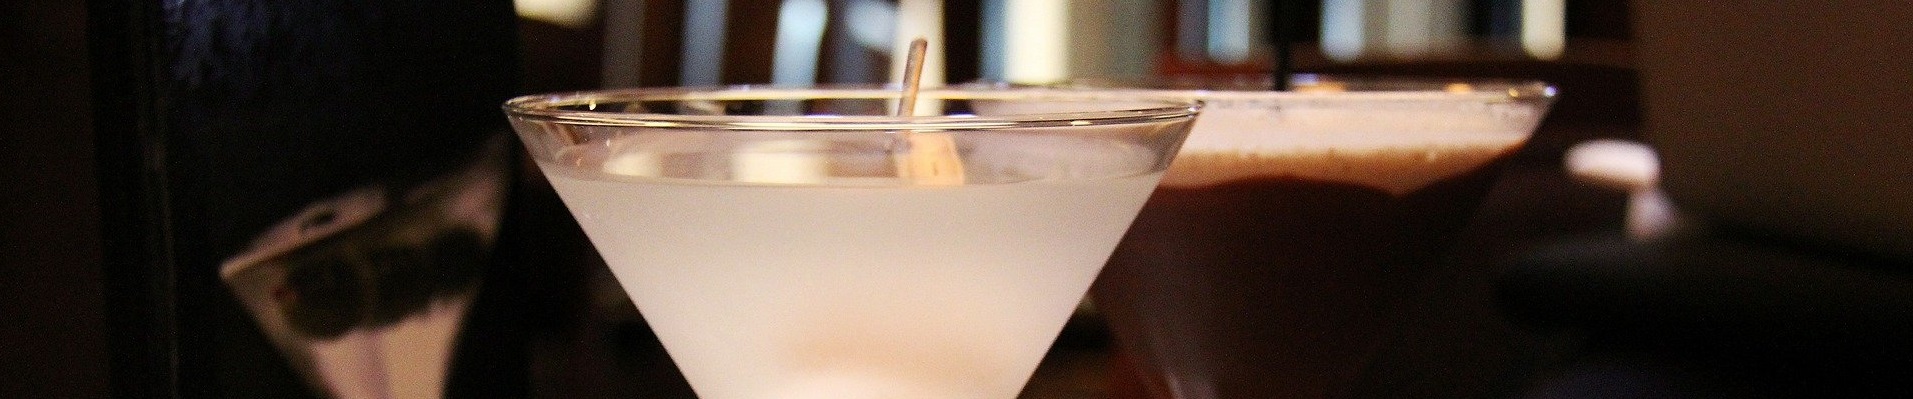 Kieliszki do martini